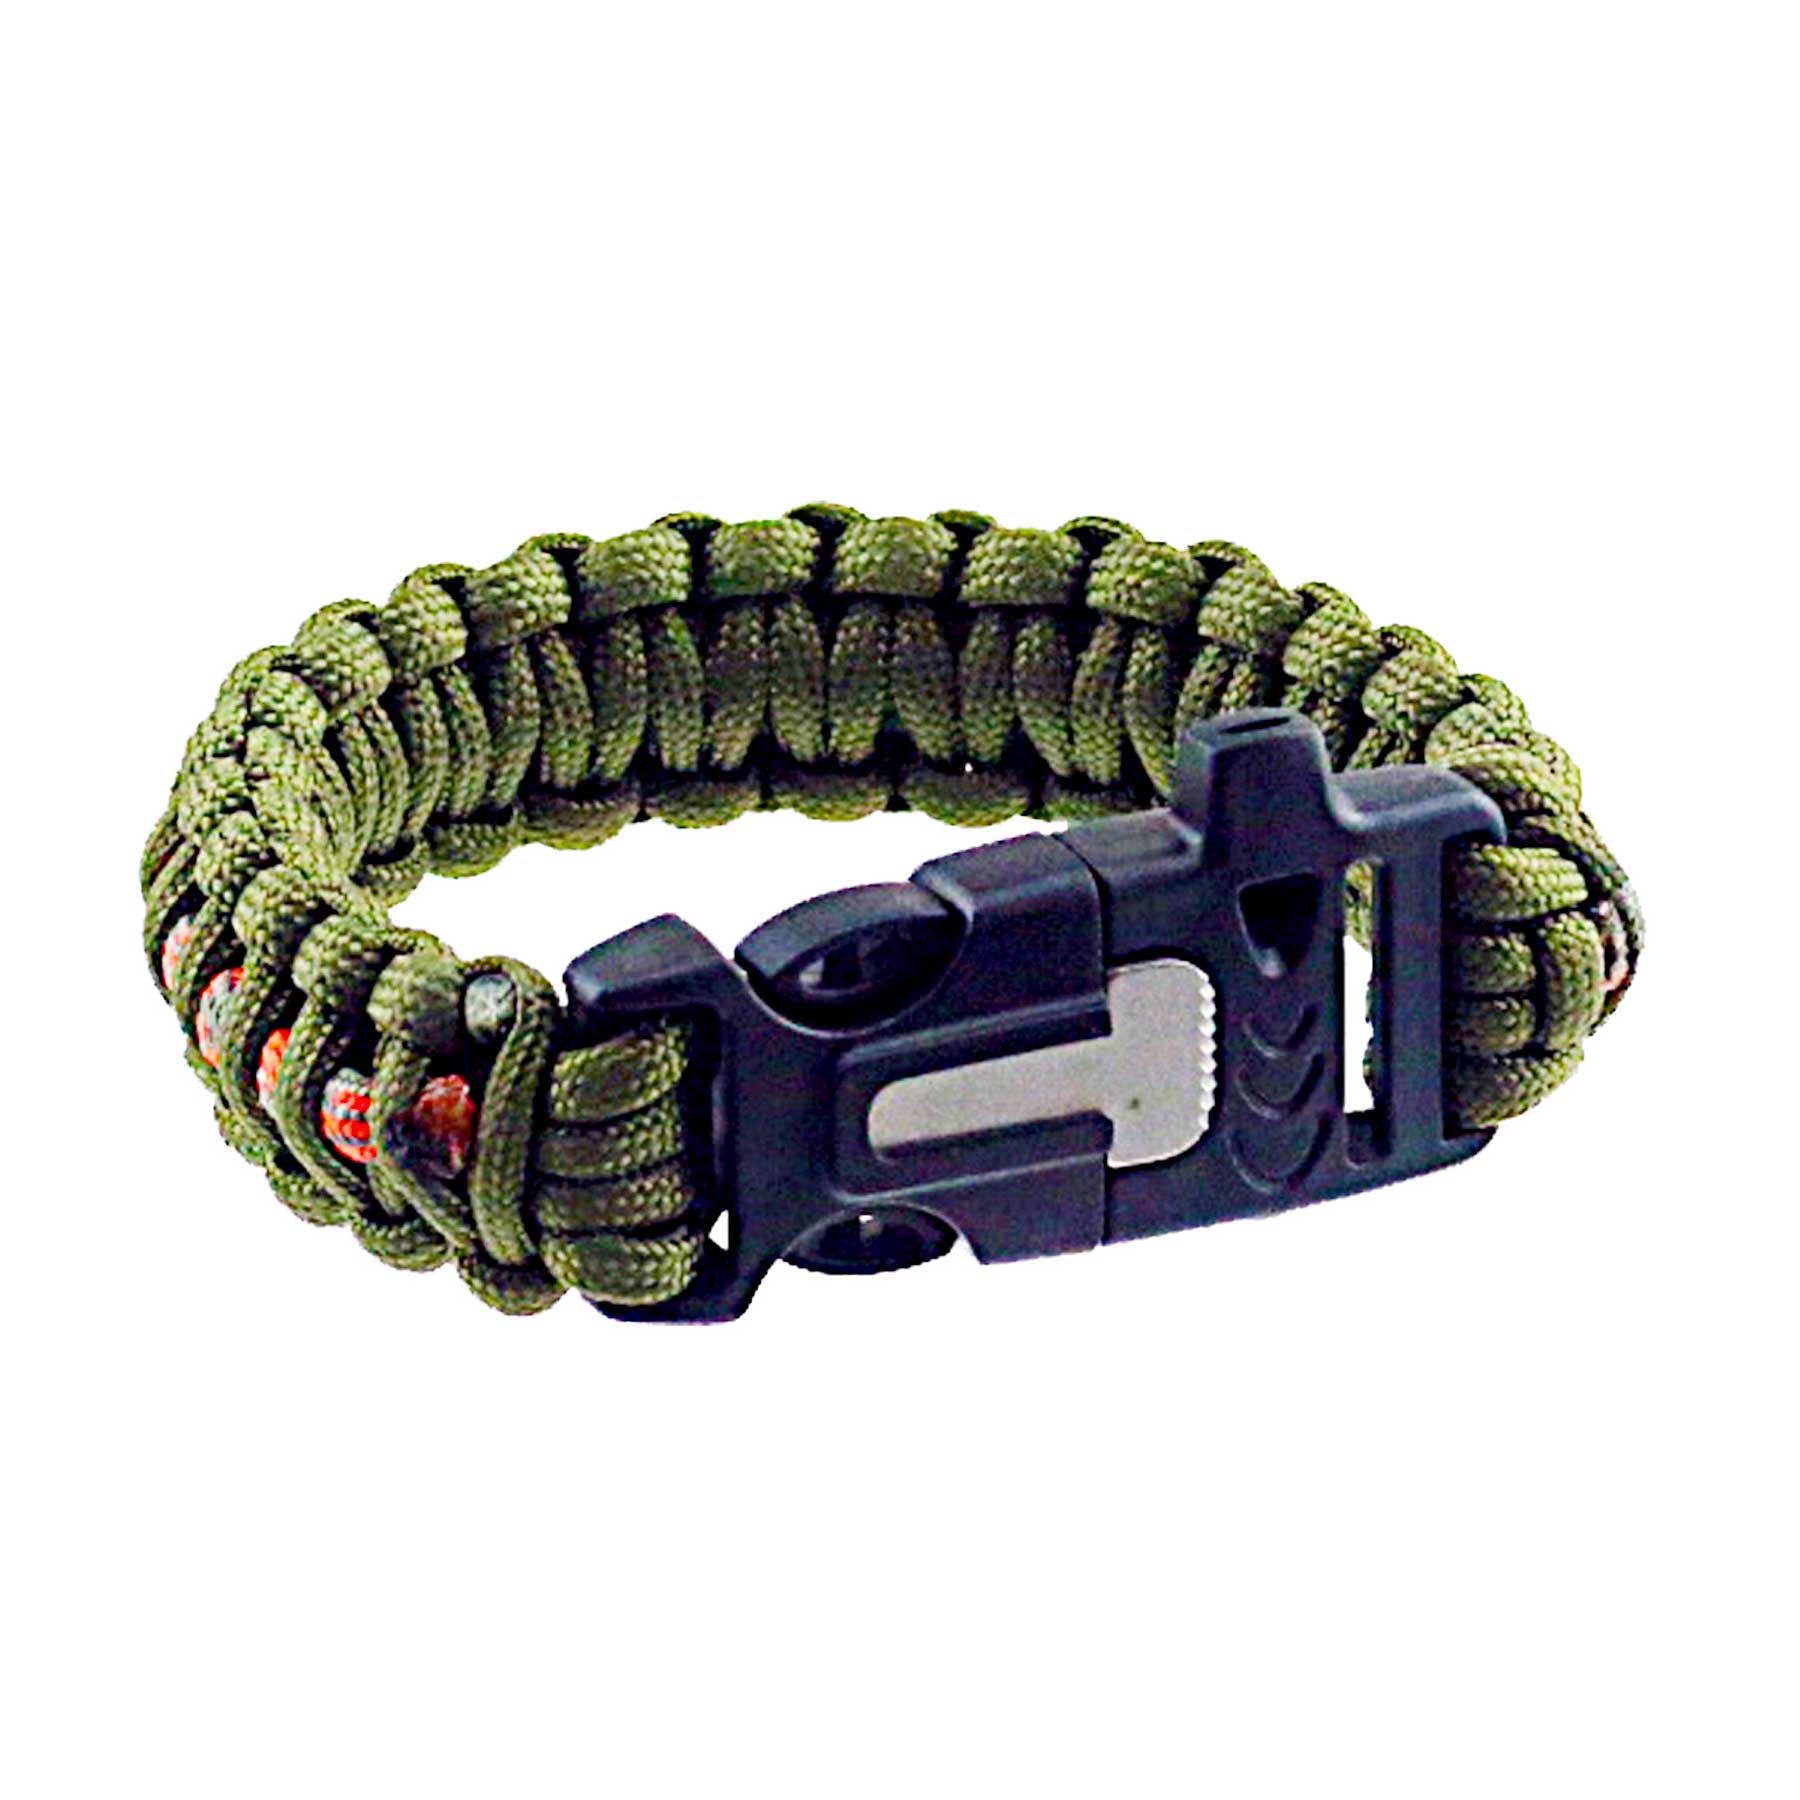 Survival Reflective Paracord Bracelet 550 Military Grade, Flint, Compass,  Whistle Built Into Buckle - Etsy